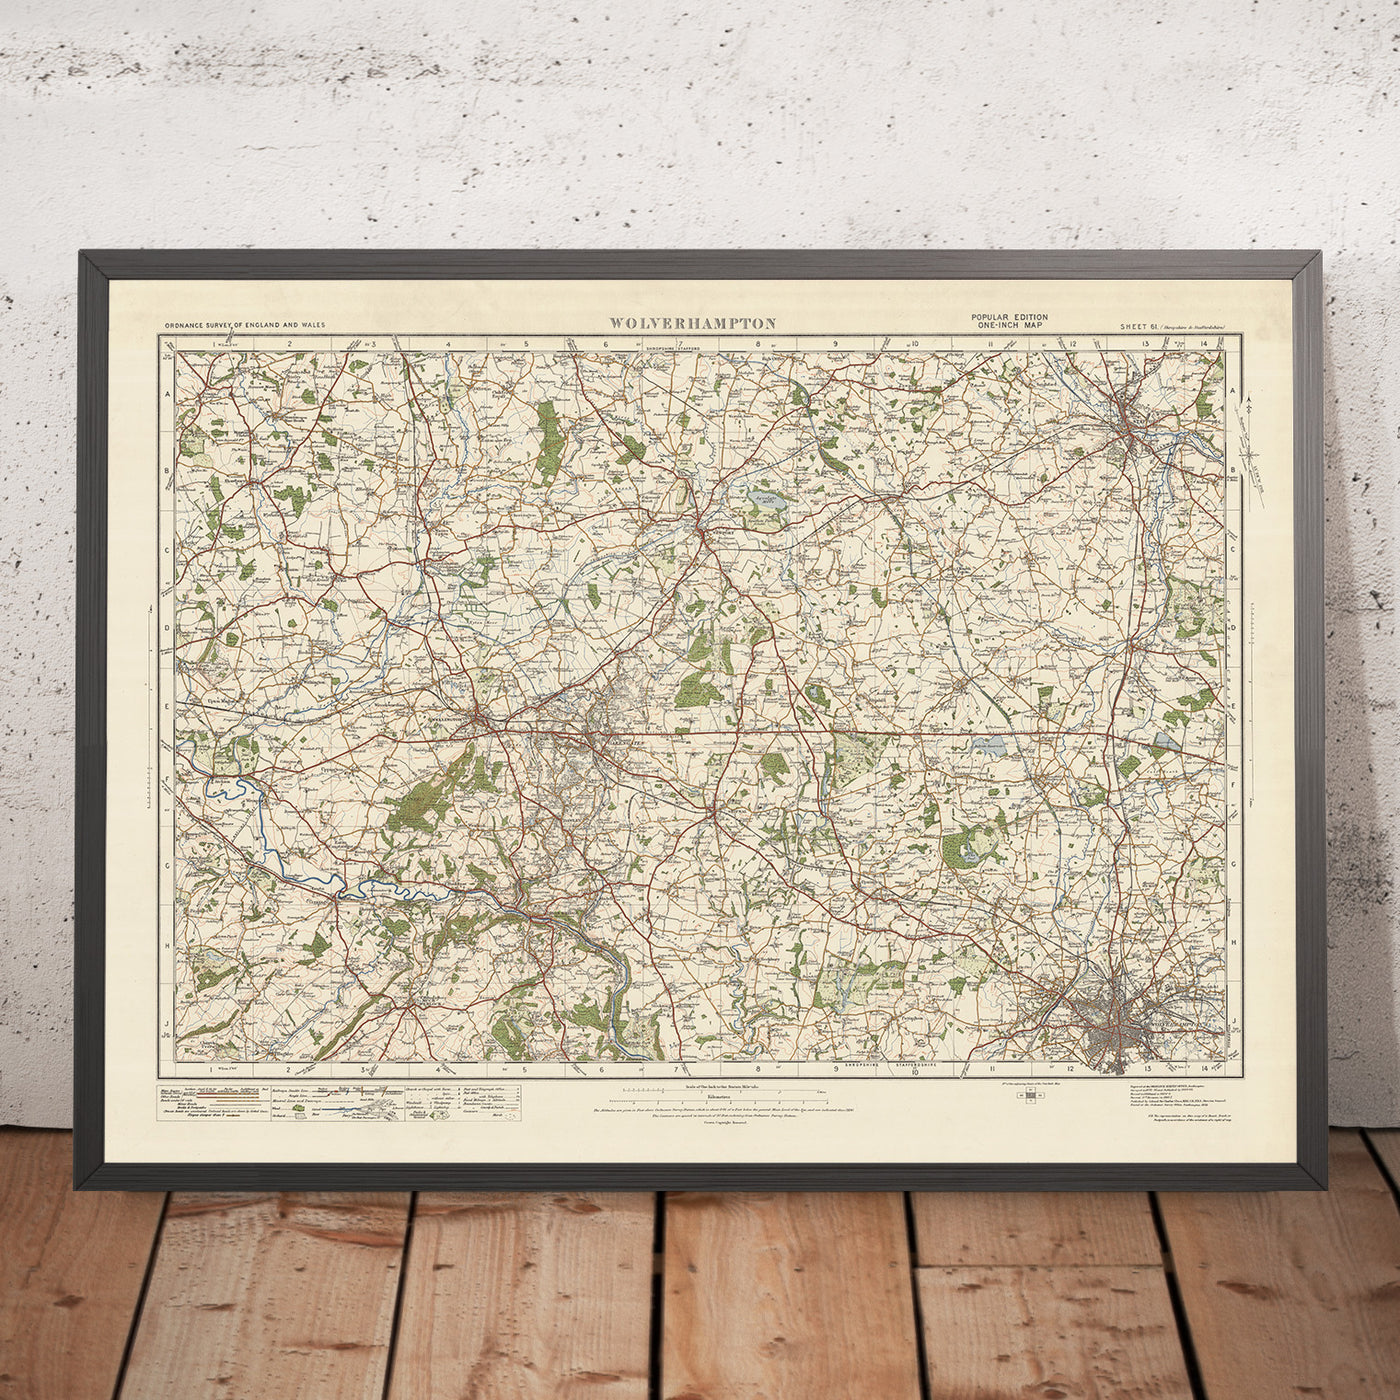 Old Ordnance Survey Map, Blatt 61 – Wolverhampton, 1925: Shifnal, Telford, Newport, Stafford, The Iron Bridge